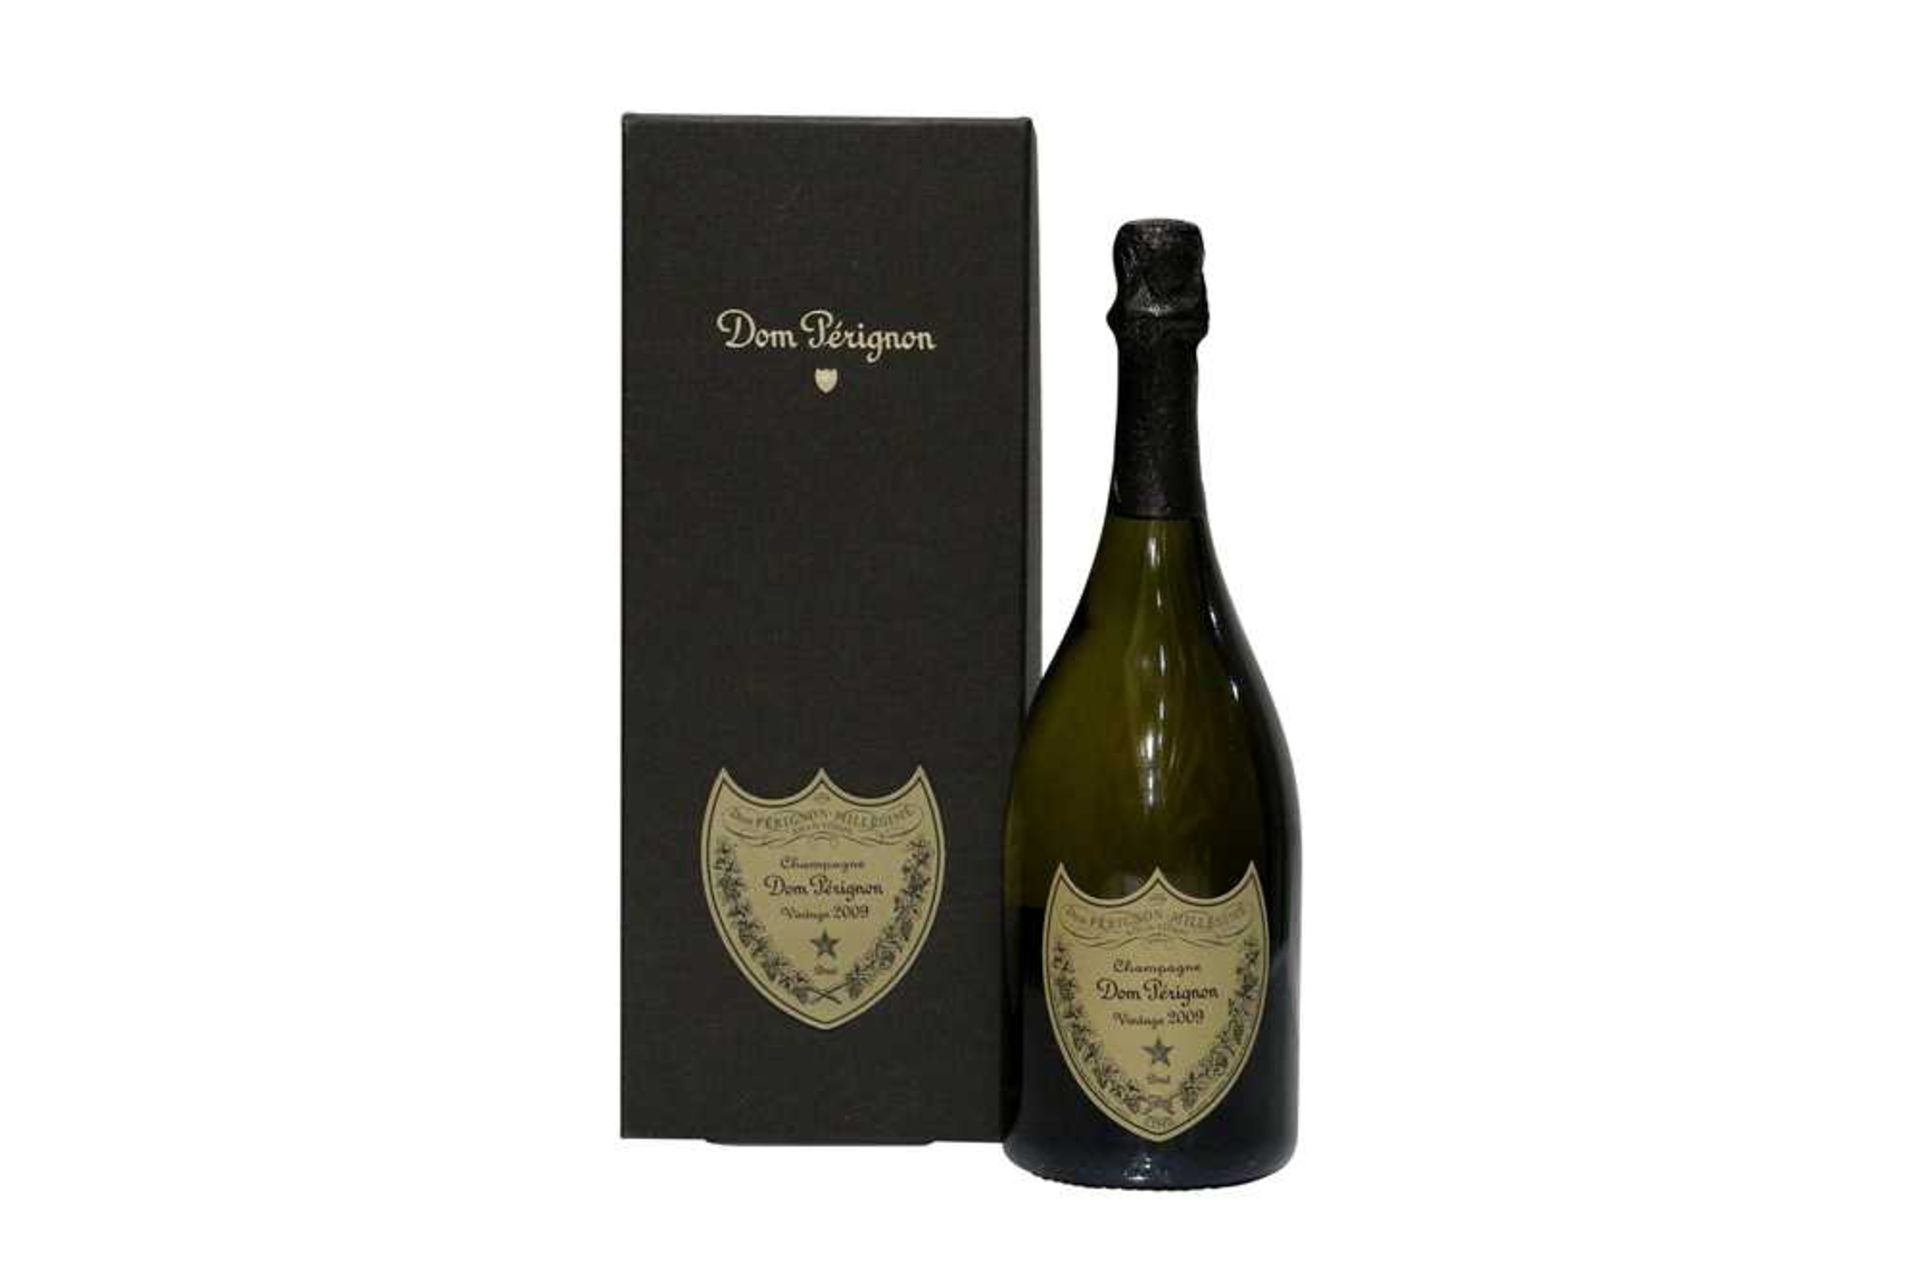 Dom Perignon, Epernay, 2009, one bottle